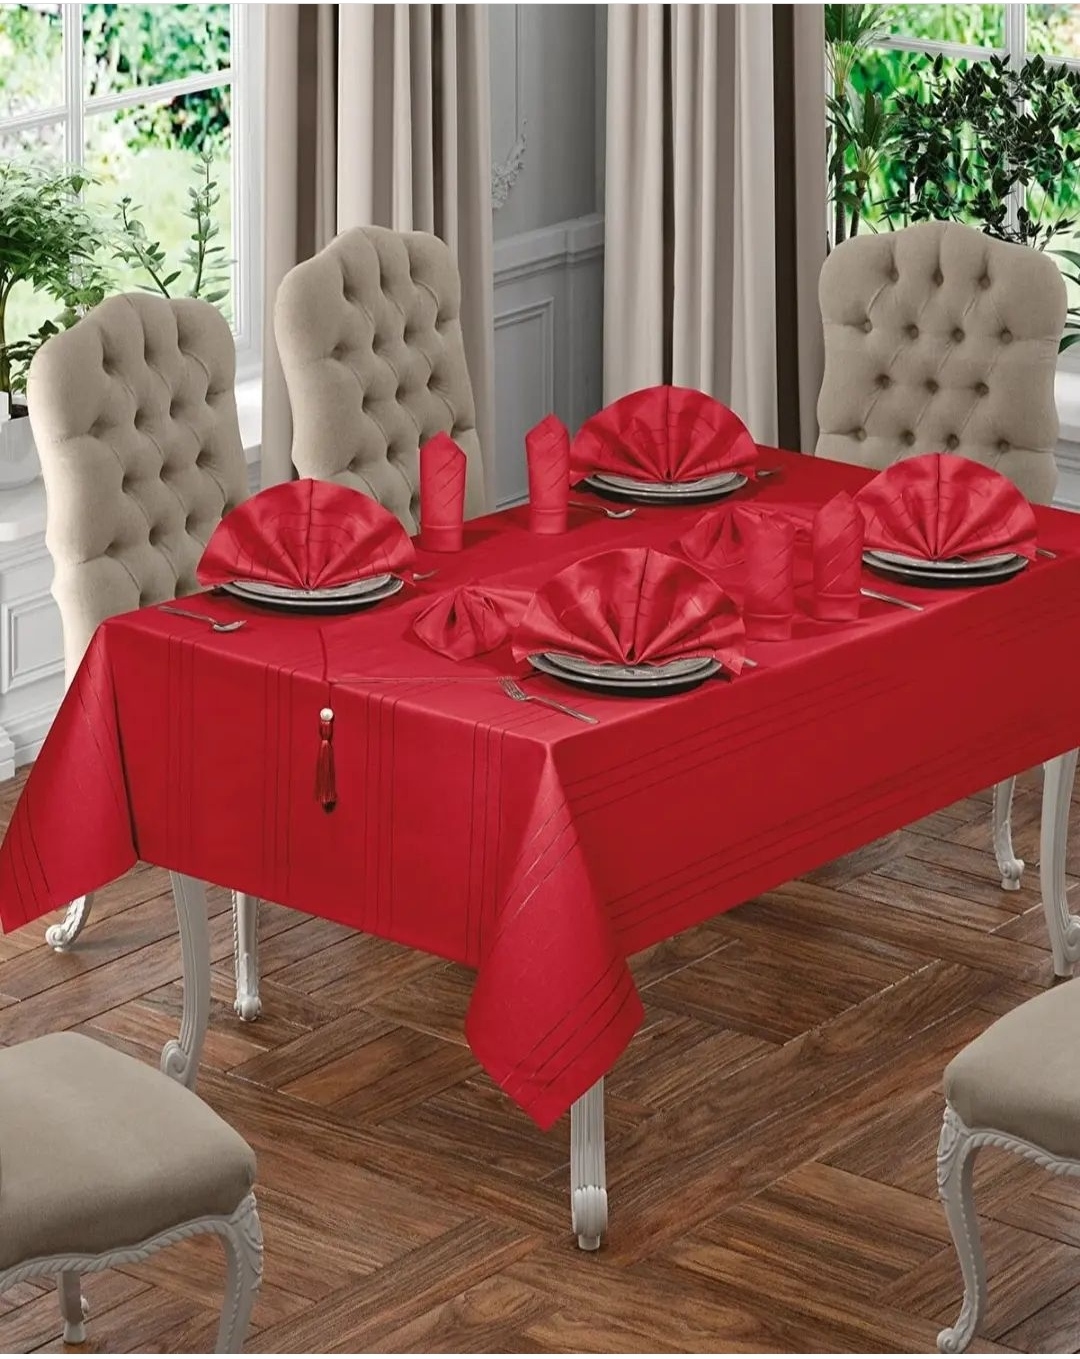 Masa örtüsü / RED